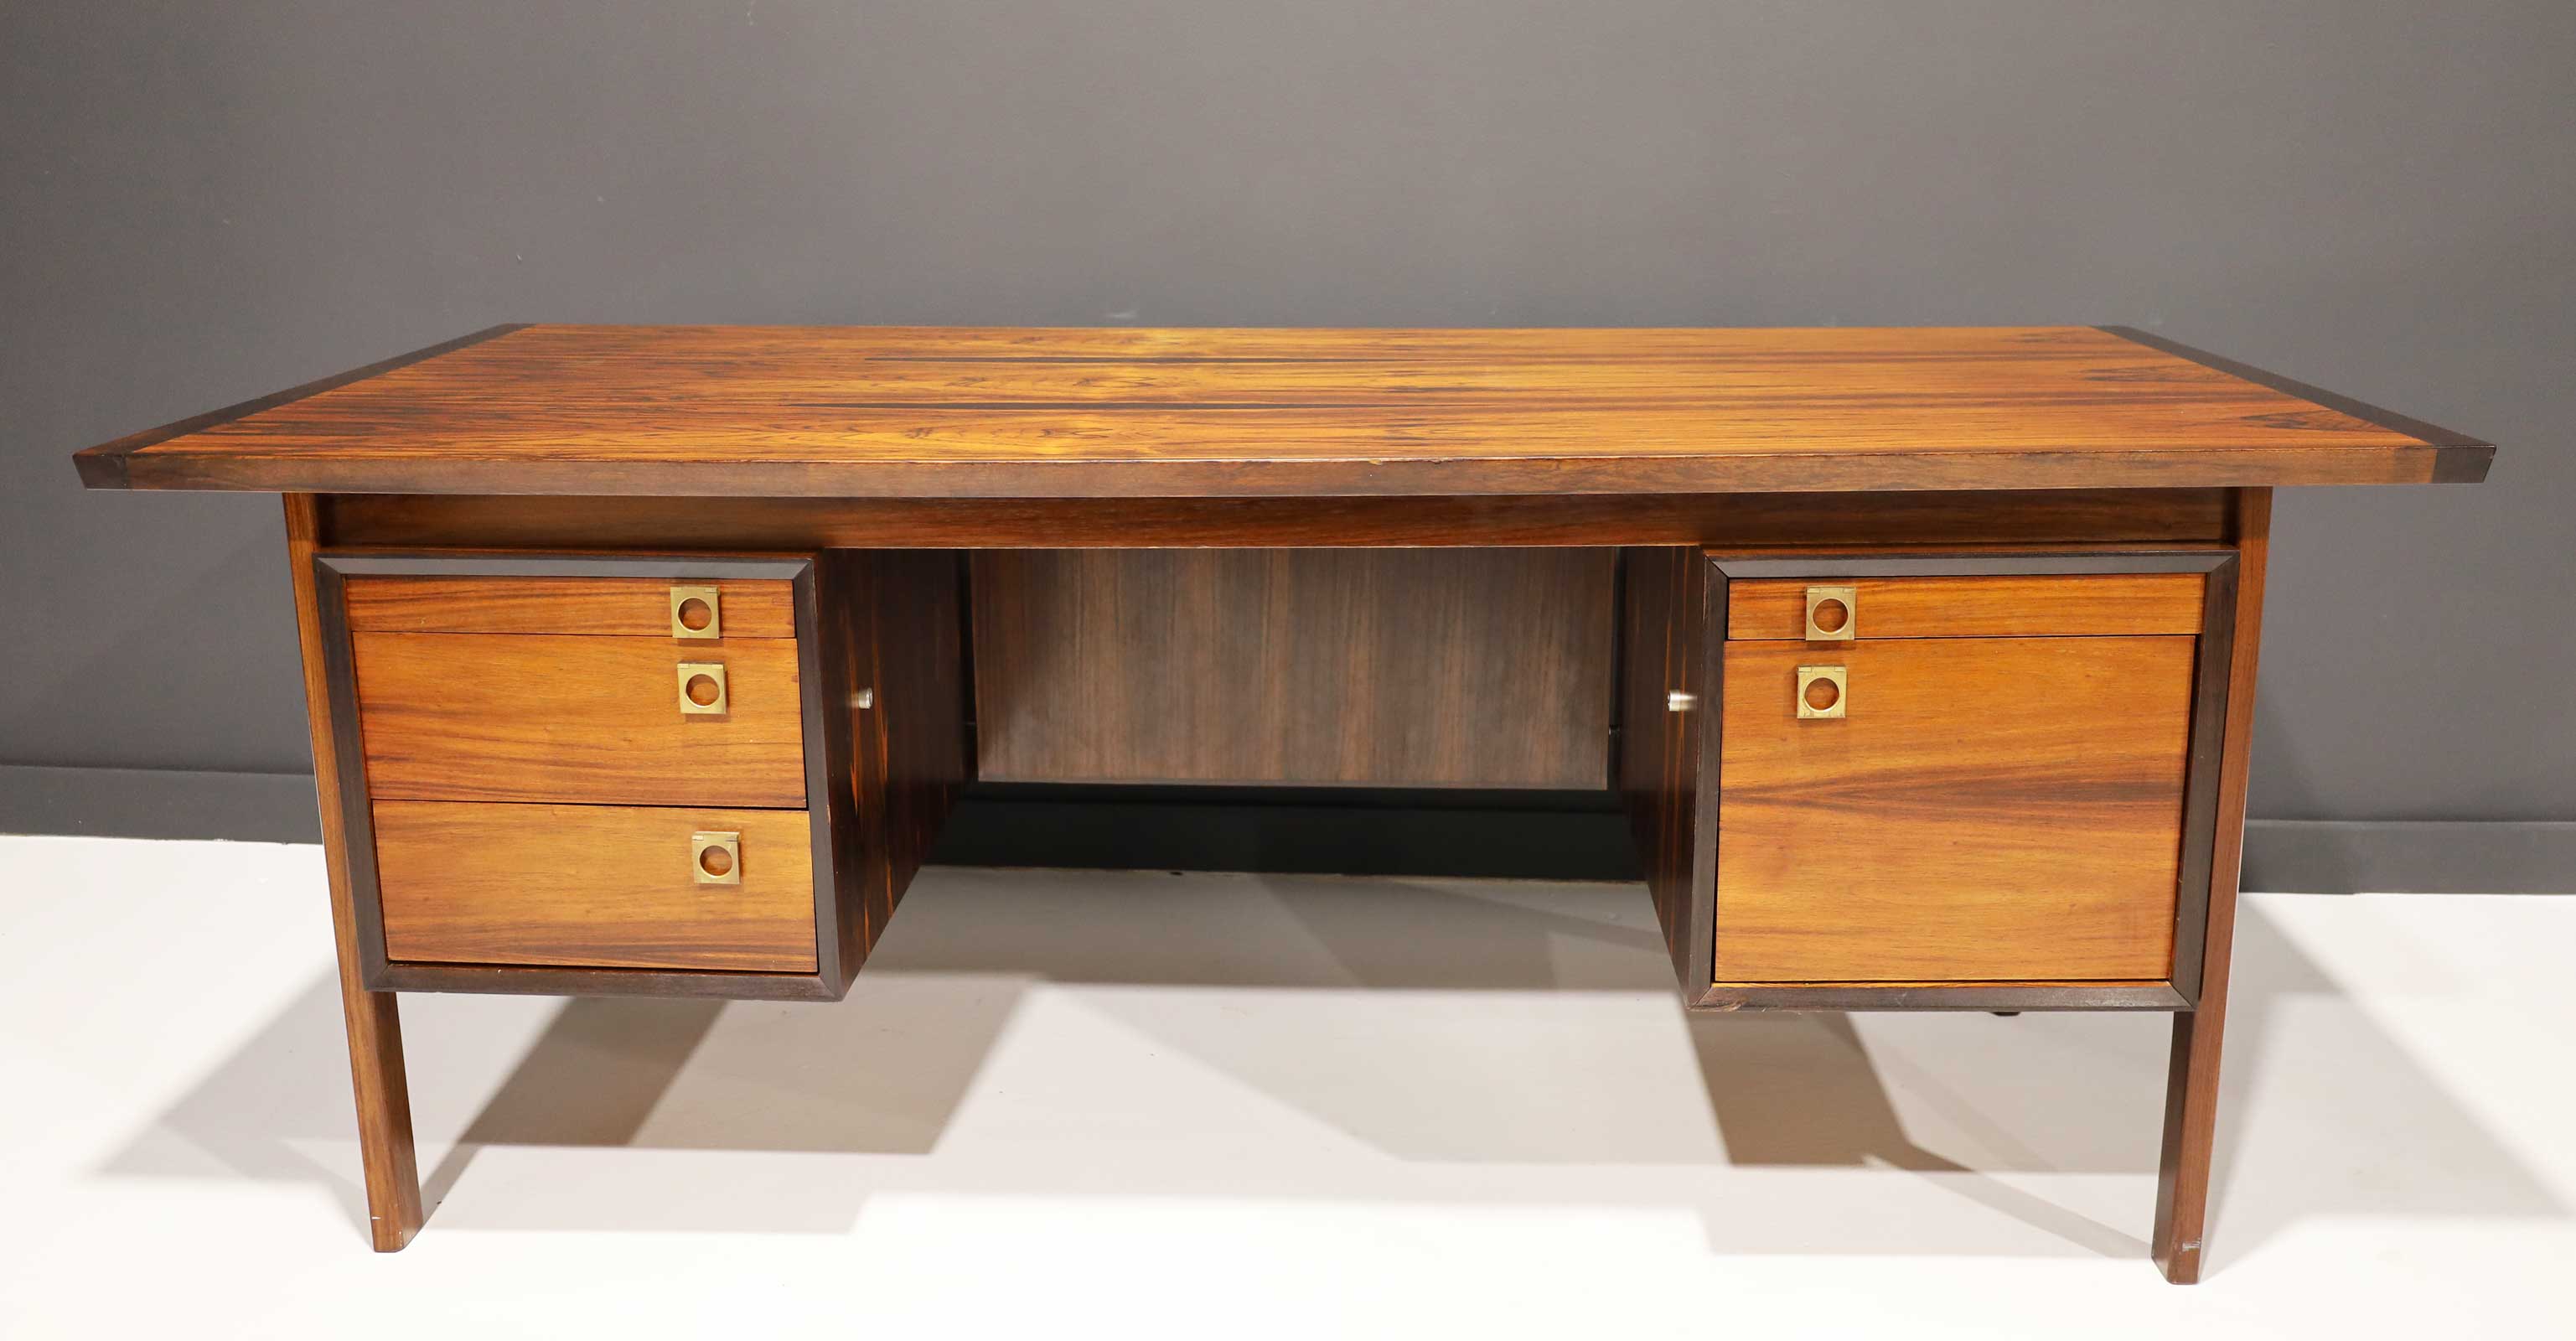 A beautiful highly figured rosewood desk designed by Arne Vodder. Manufactured by Sibast Mobler in Denmark, 1970s.